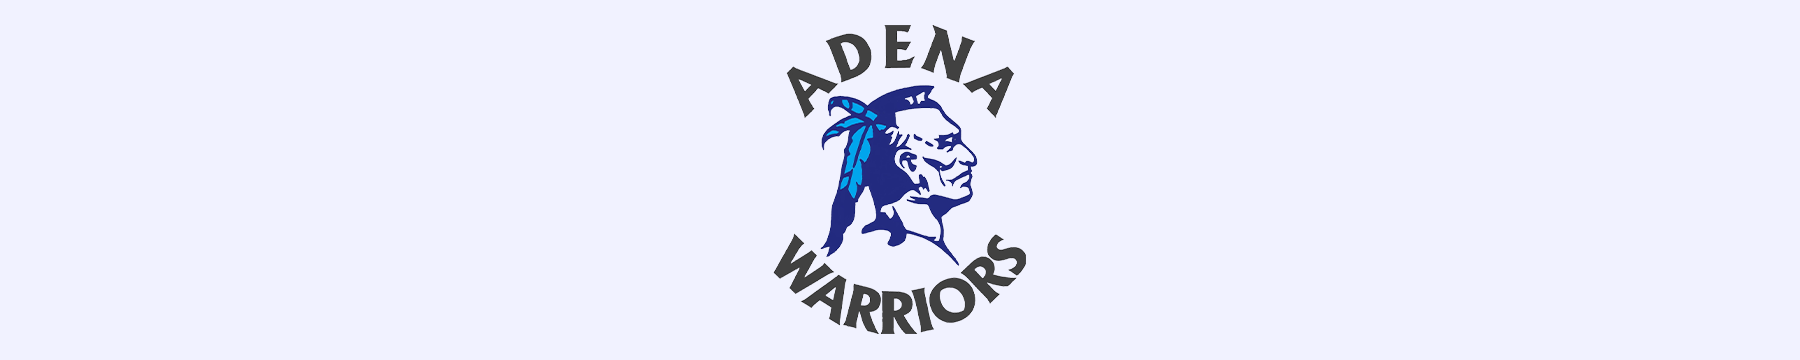 Adena Athletics Booster